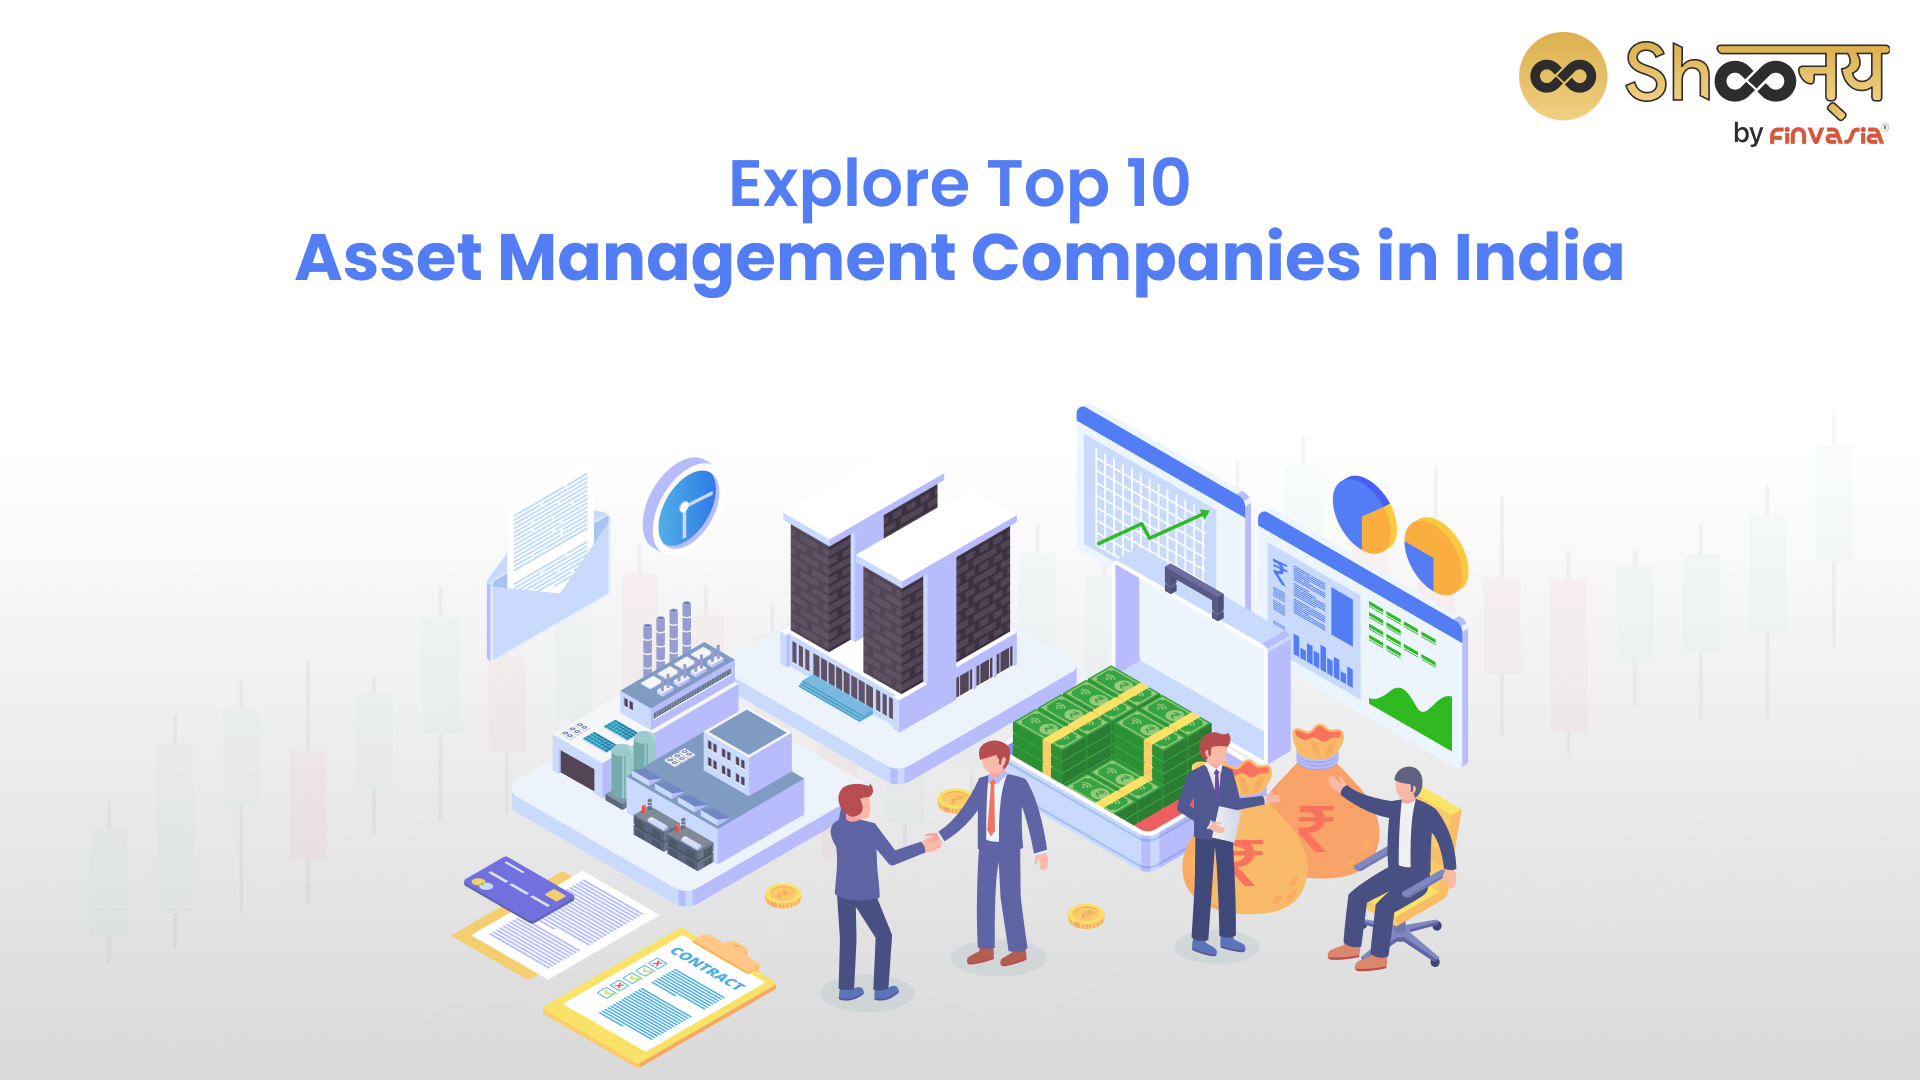 Explore the Top 10 AMCs- Asset Management Companies in India